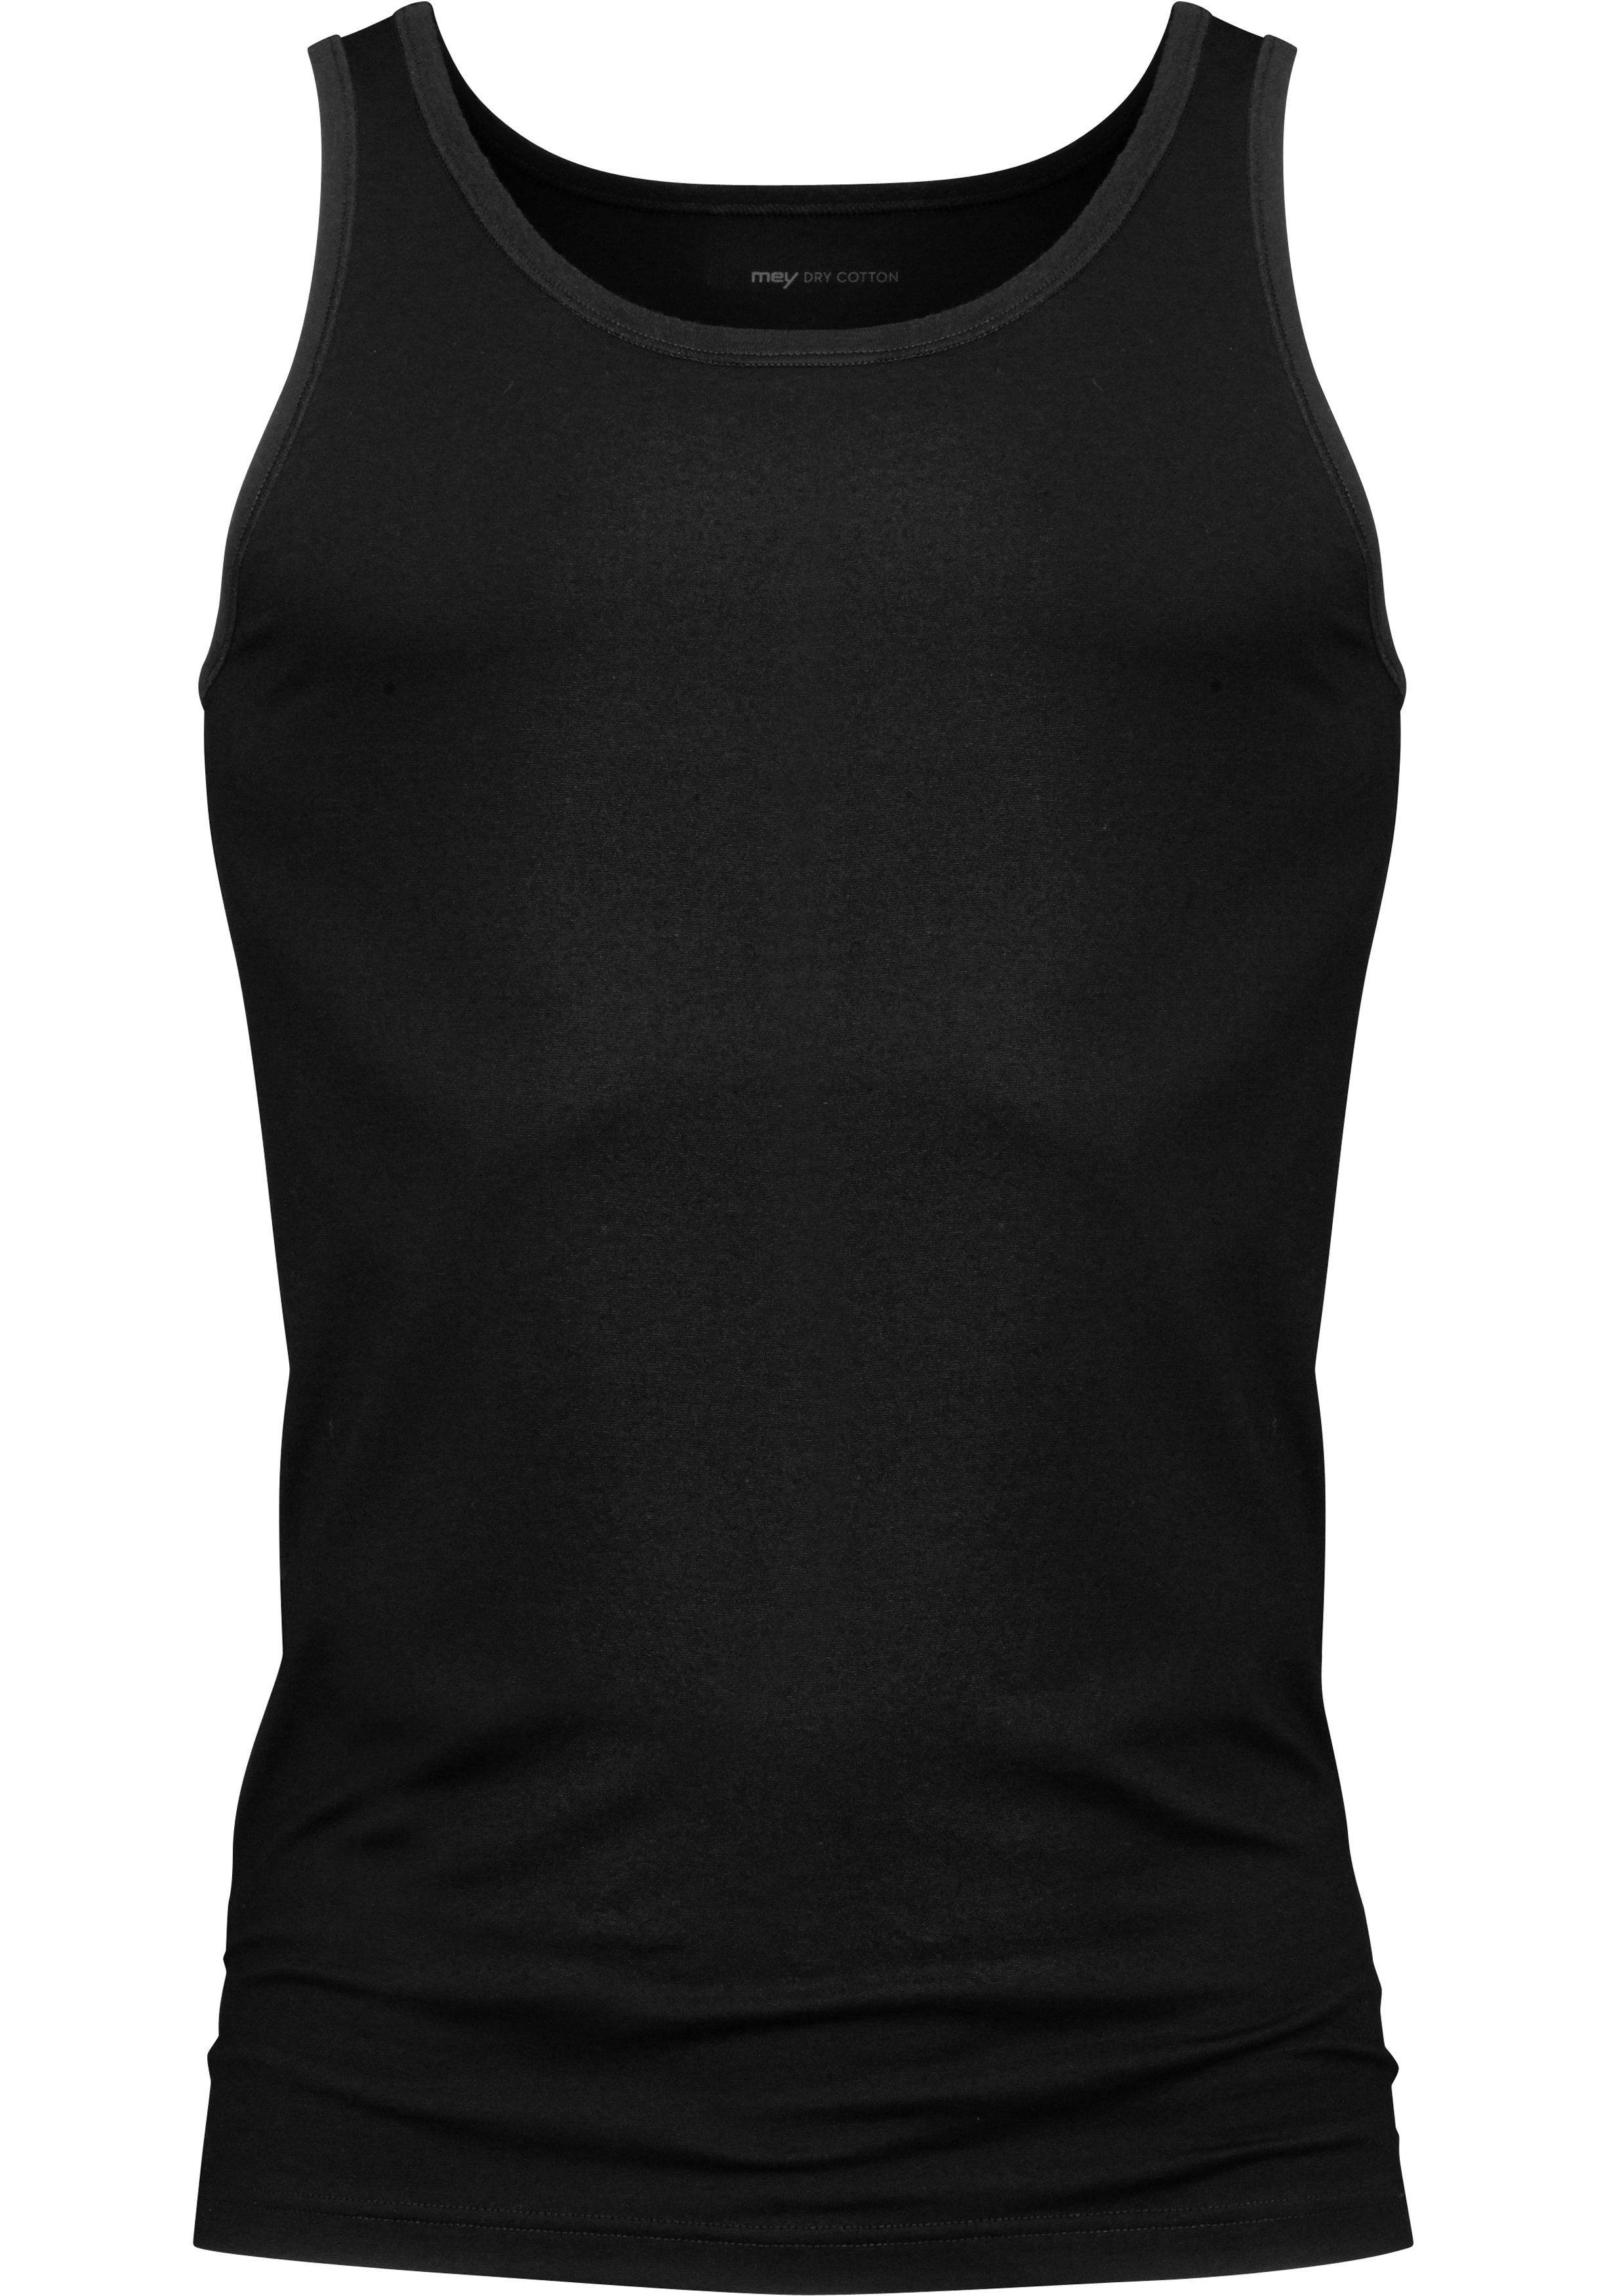 morfine twintig Boomgaard Mey Dry Cotton athletic shirt (1-pack), heren singlet, zwart - Zomer SALE  tot 70% korting